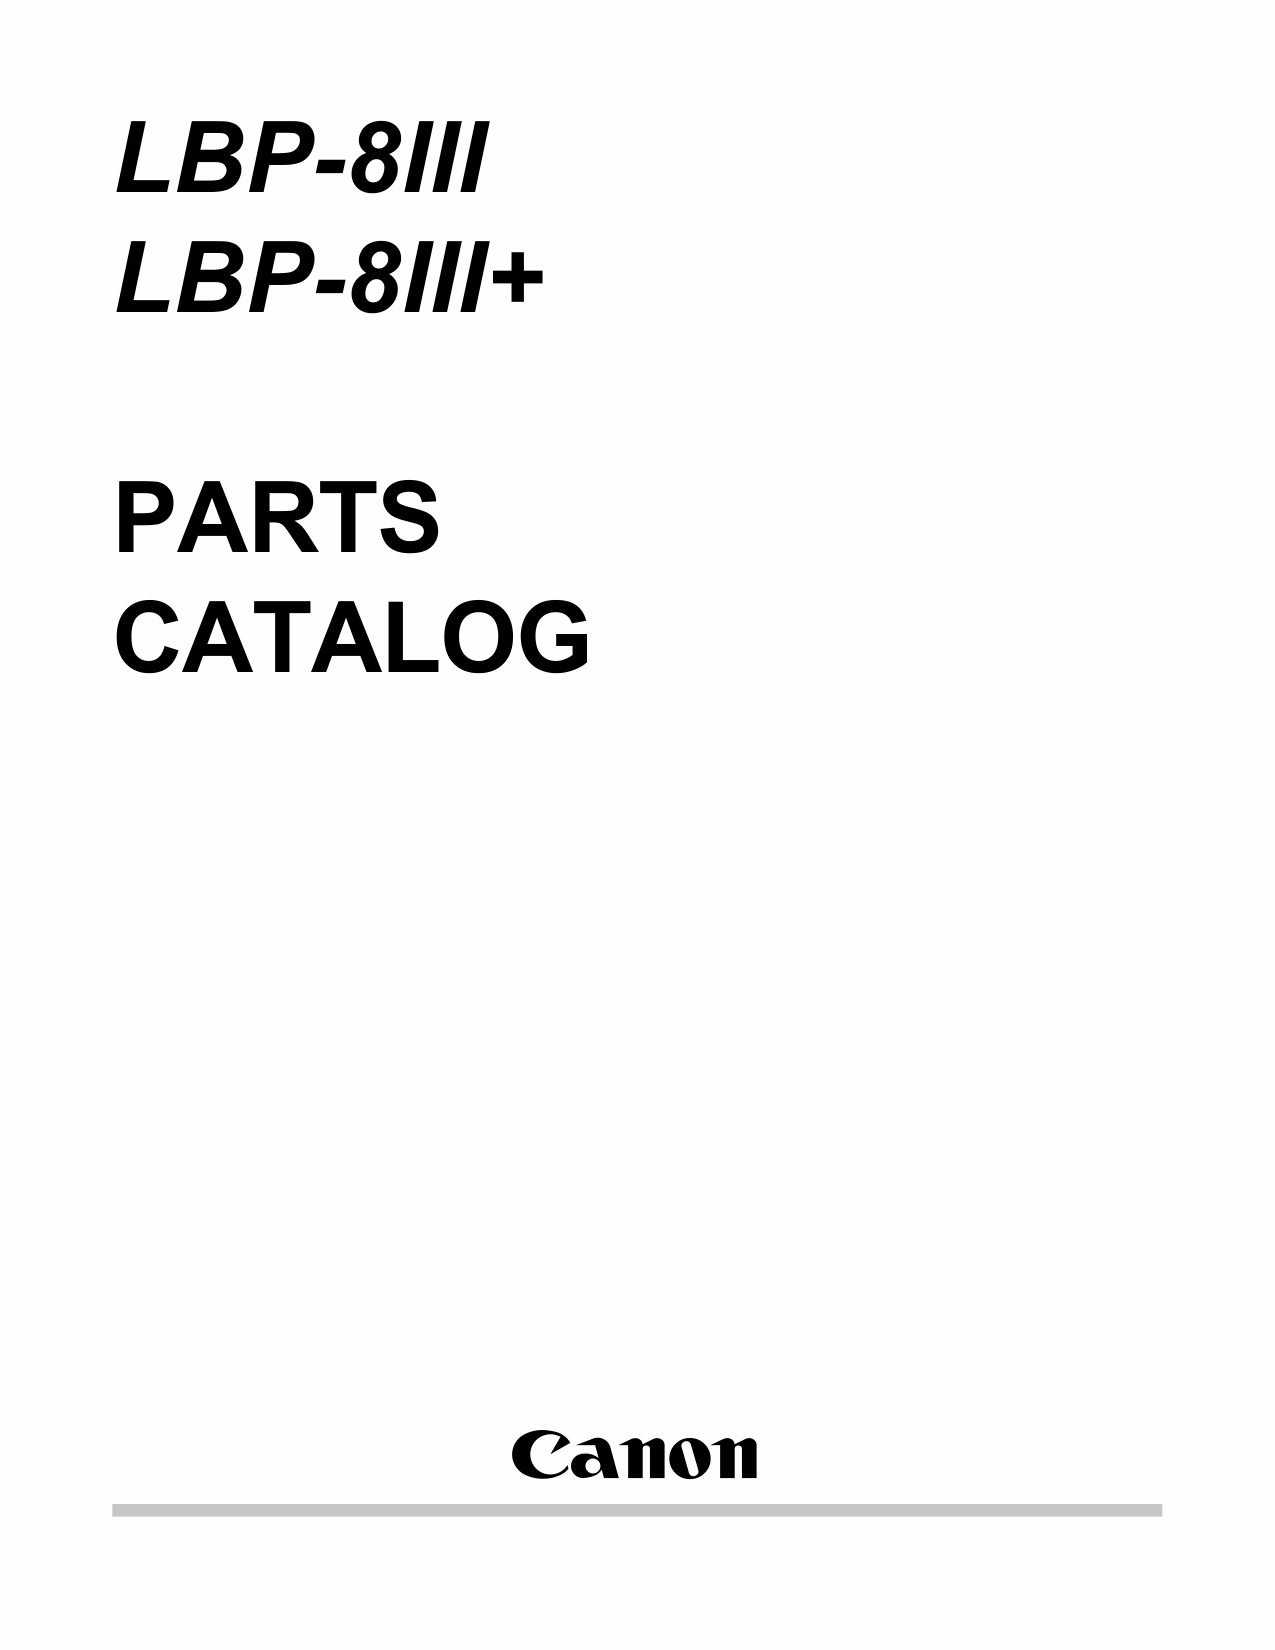 Canon imageCLASS LBP-8III 8IIIPlus Parts Catalog Manual-1